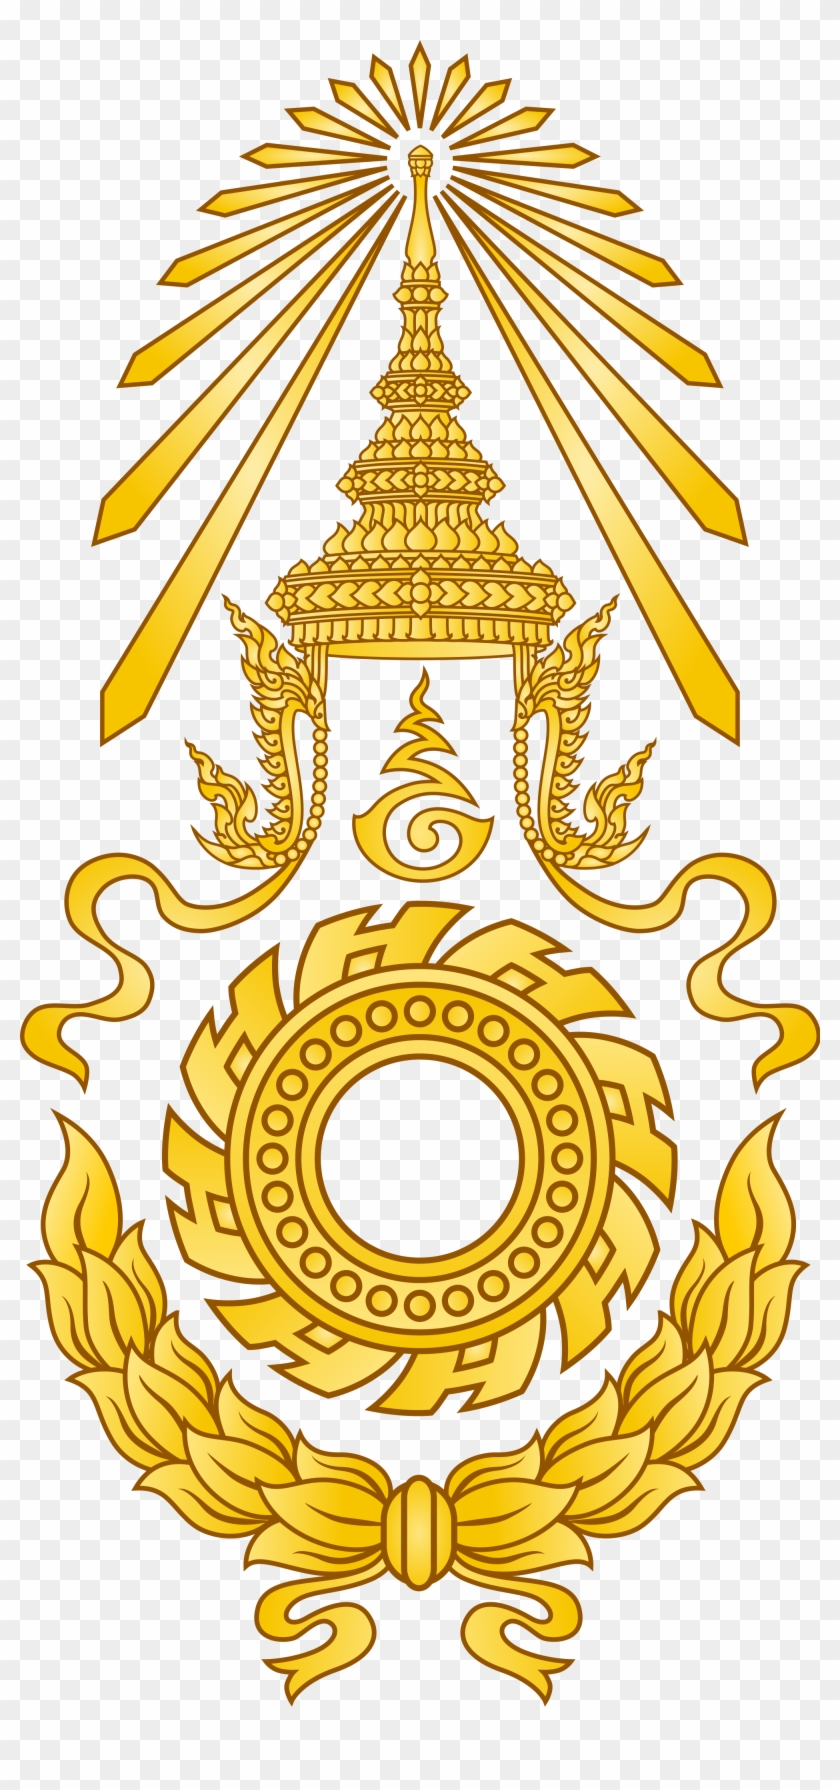 Emblem Of The Royal Thai Army - Royal Thai Army Clipart #4616565